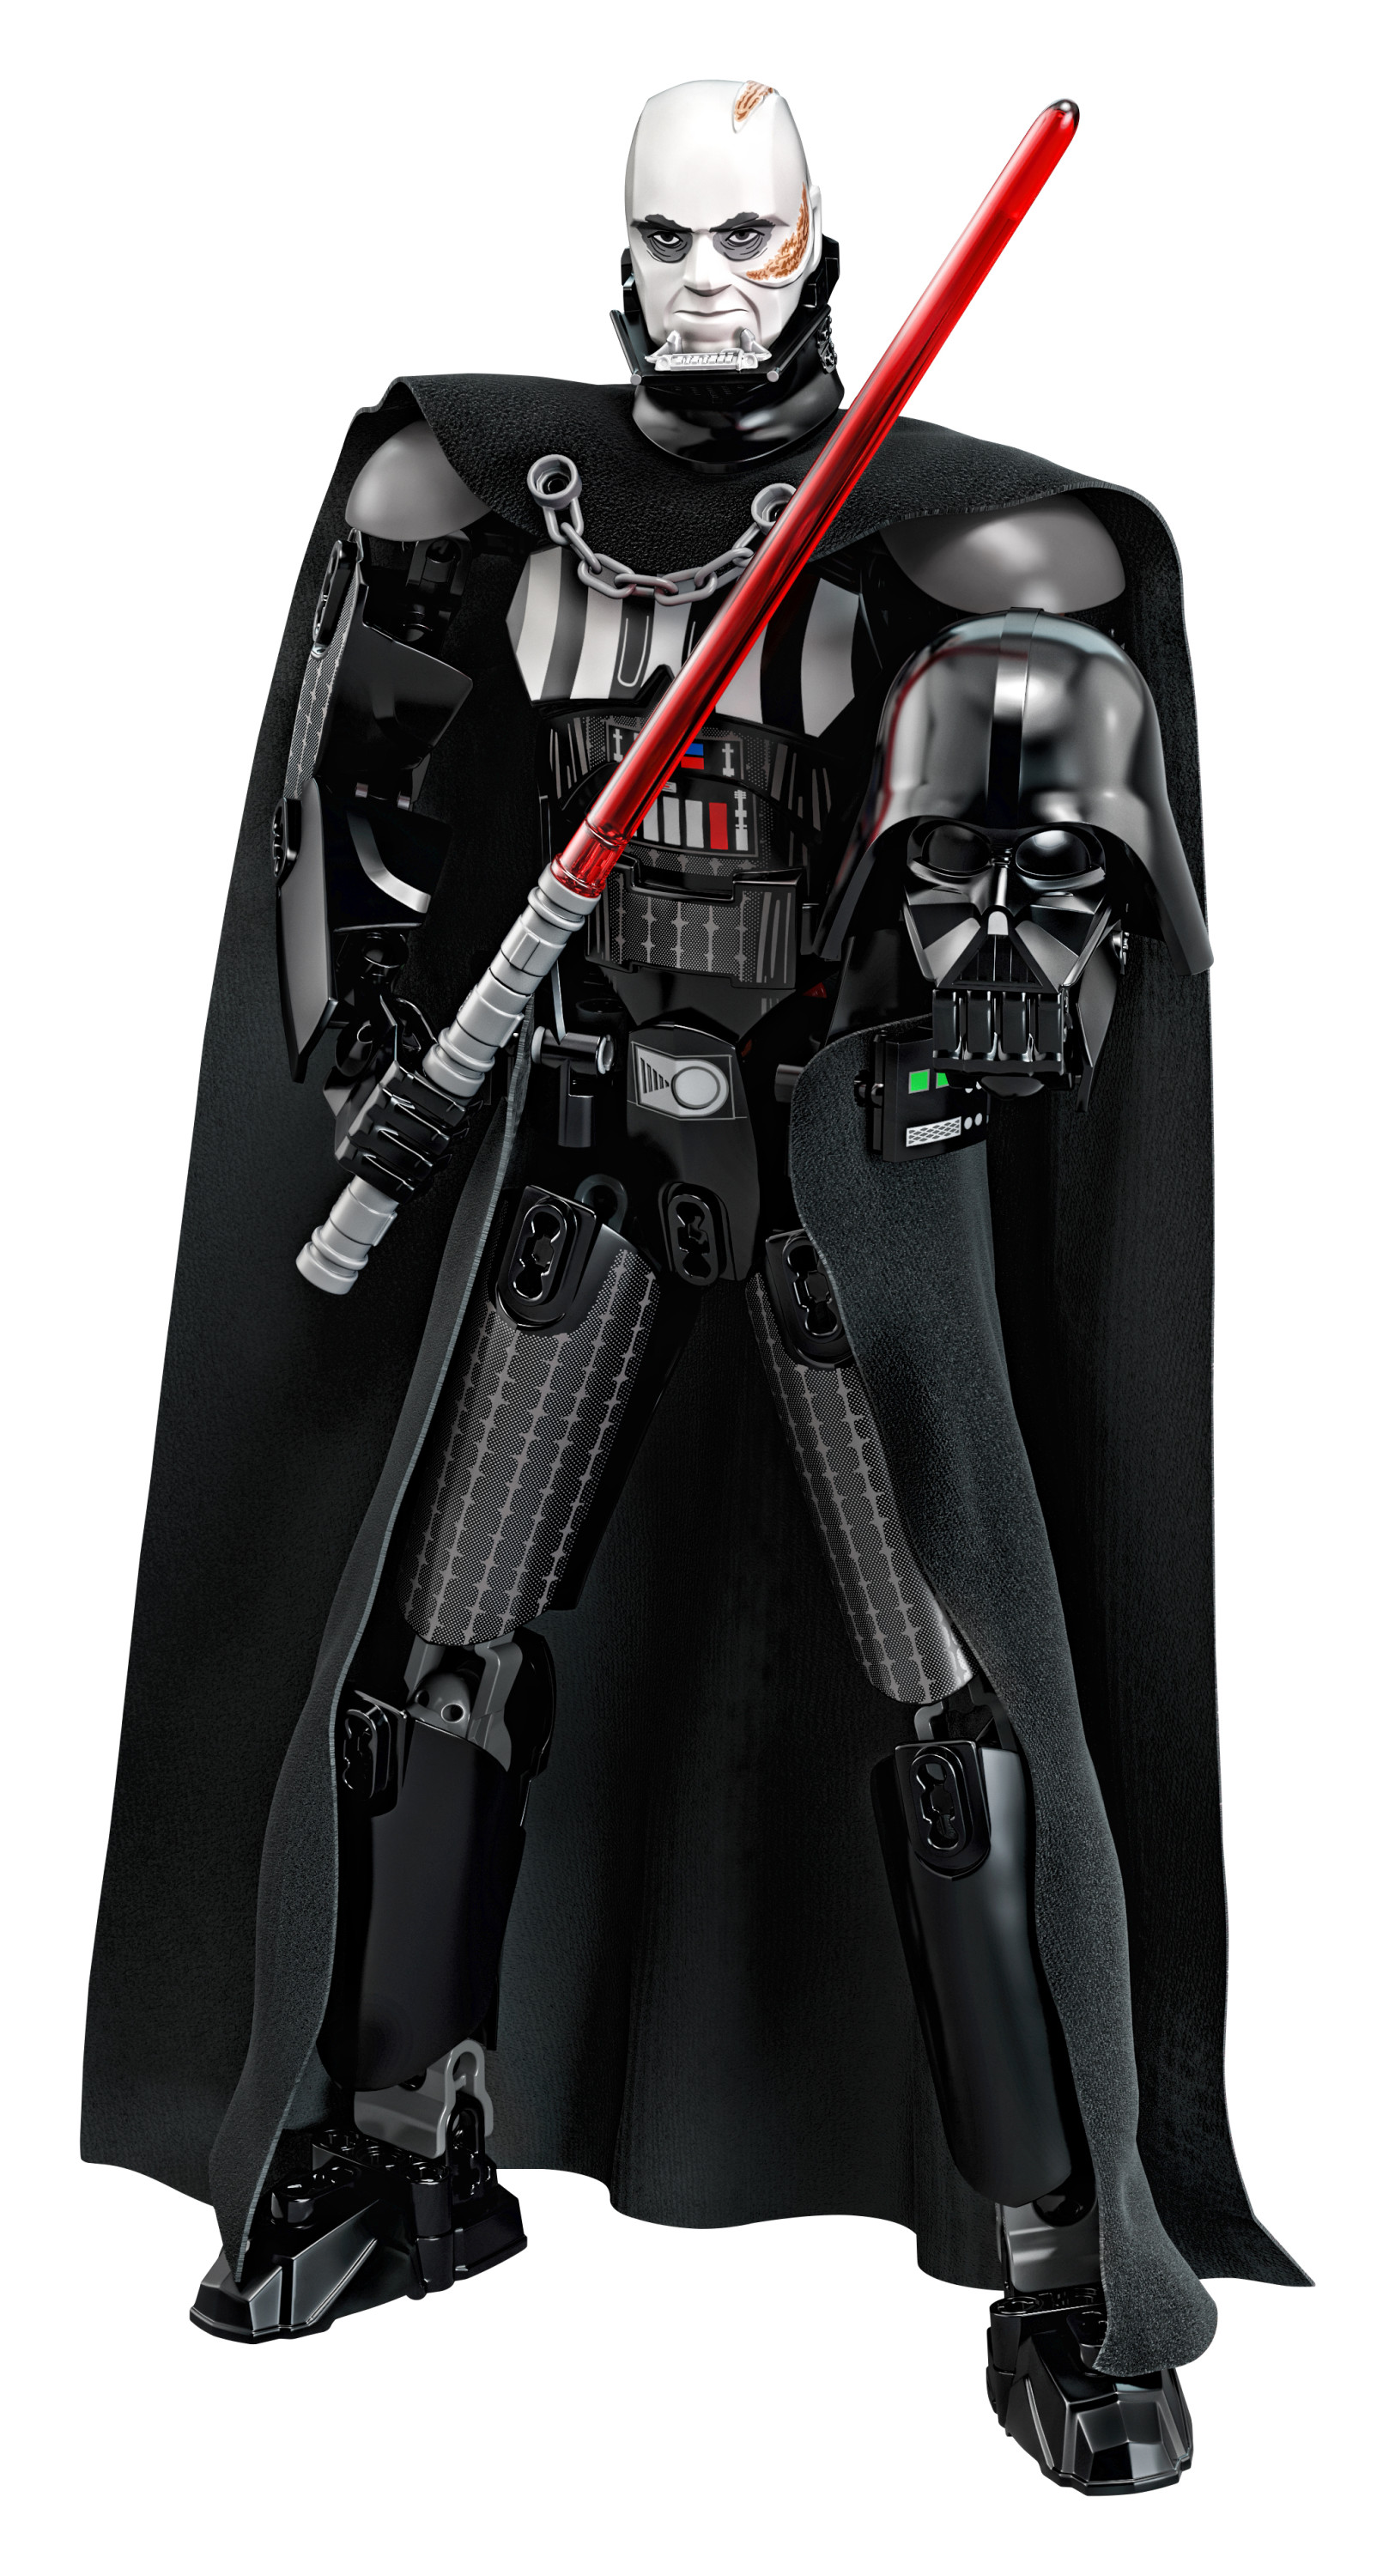 LEGO Star Wars Darth Vader 75534 - image 3 of 5